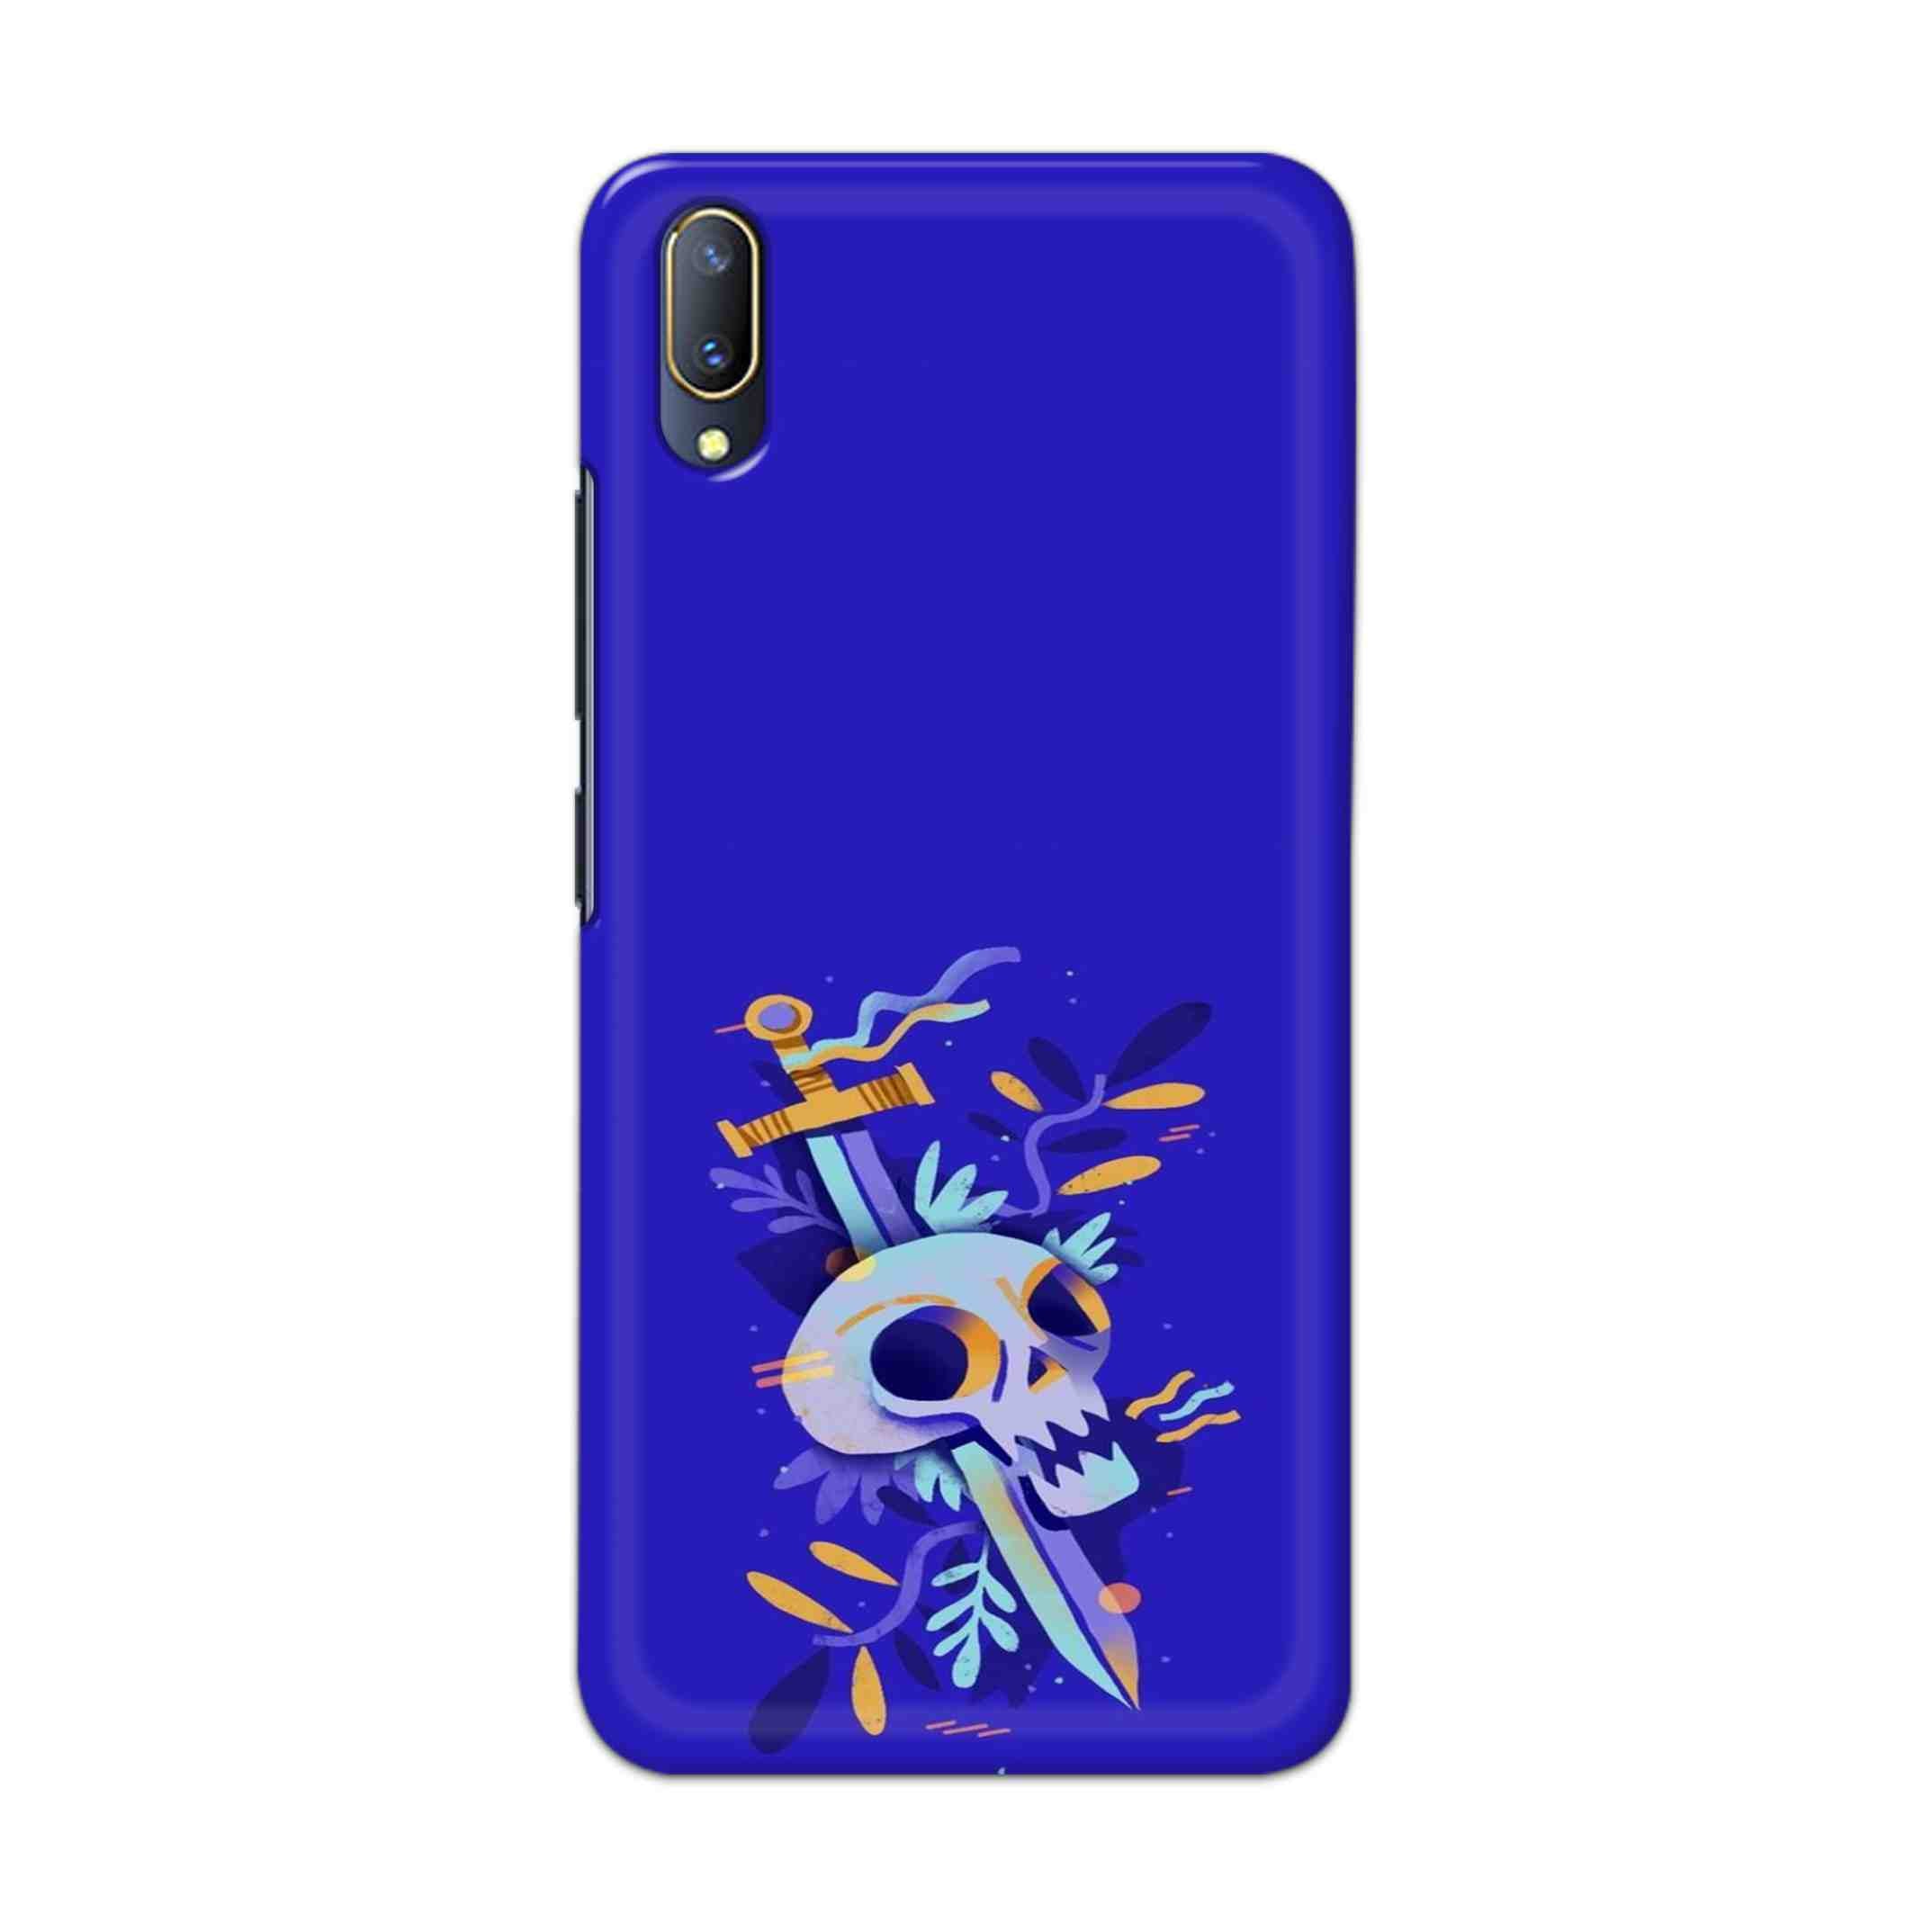 Buy Blue Skull Hard Back Mobile Phone Case Cover For V11 PRO Online